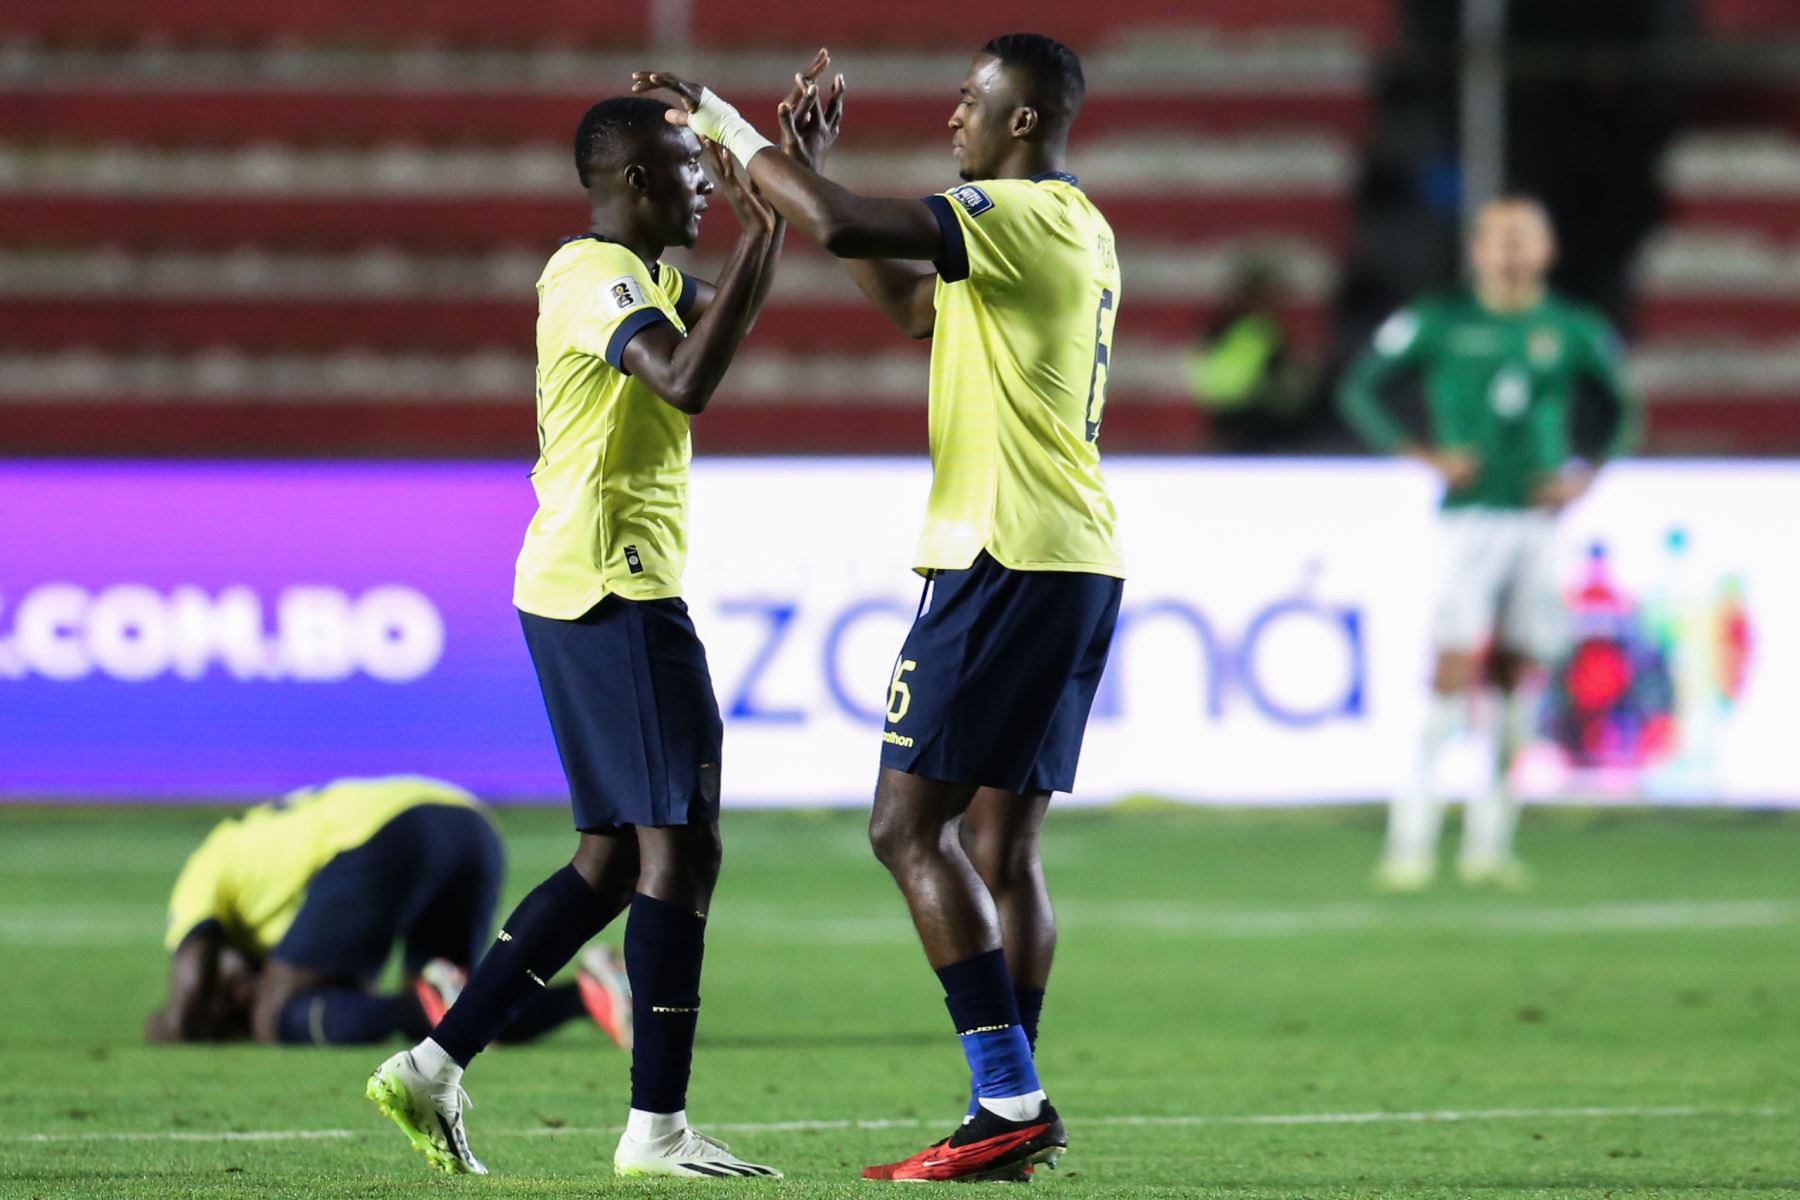 Ecuador venció 2-1 a Bolivia en La Paz en la tercera fecha de las Eliminatorias para el Mundial 2026